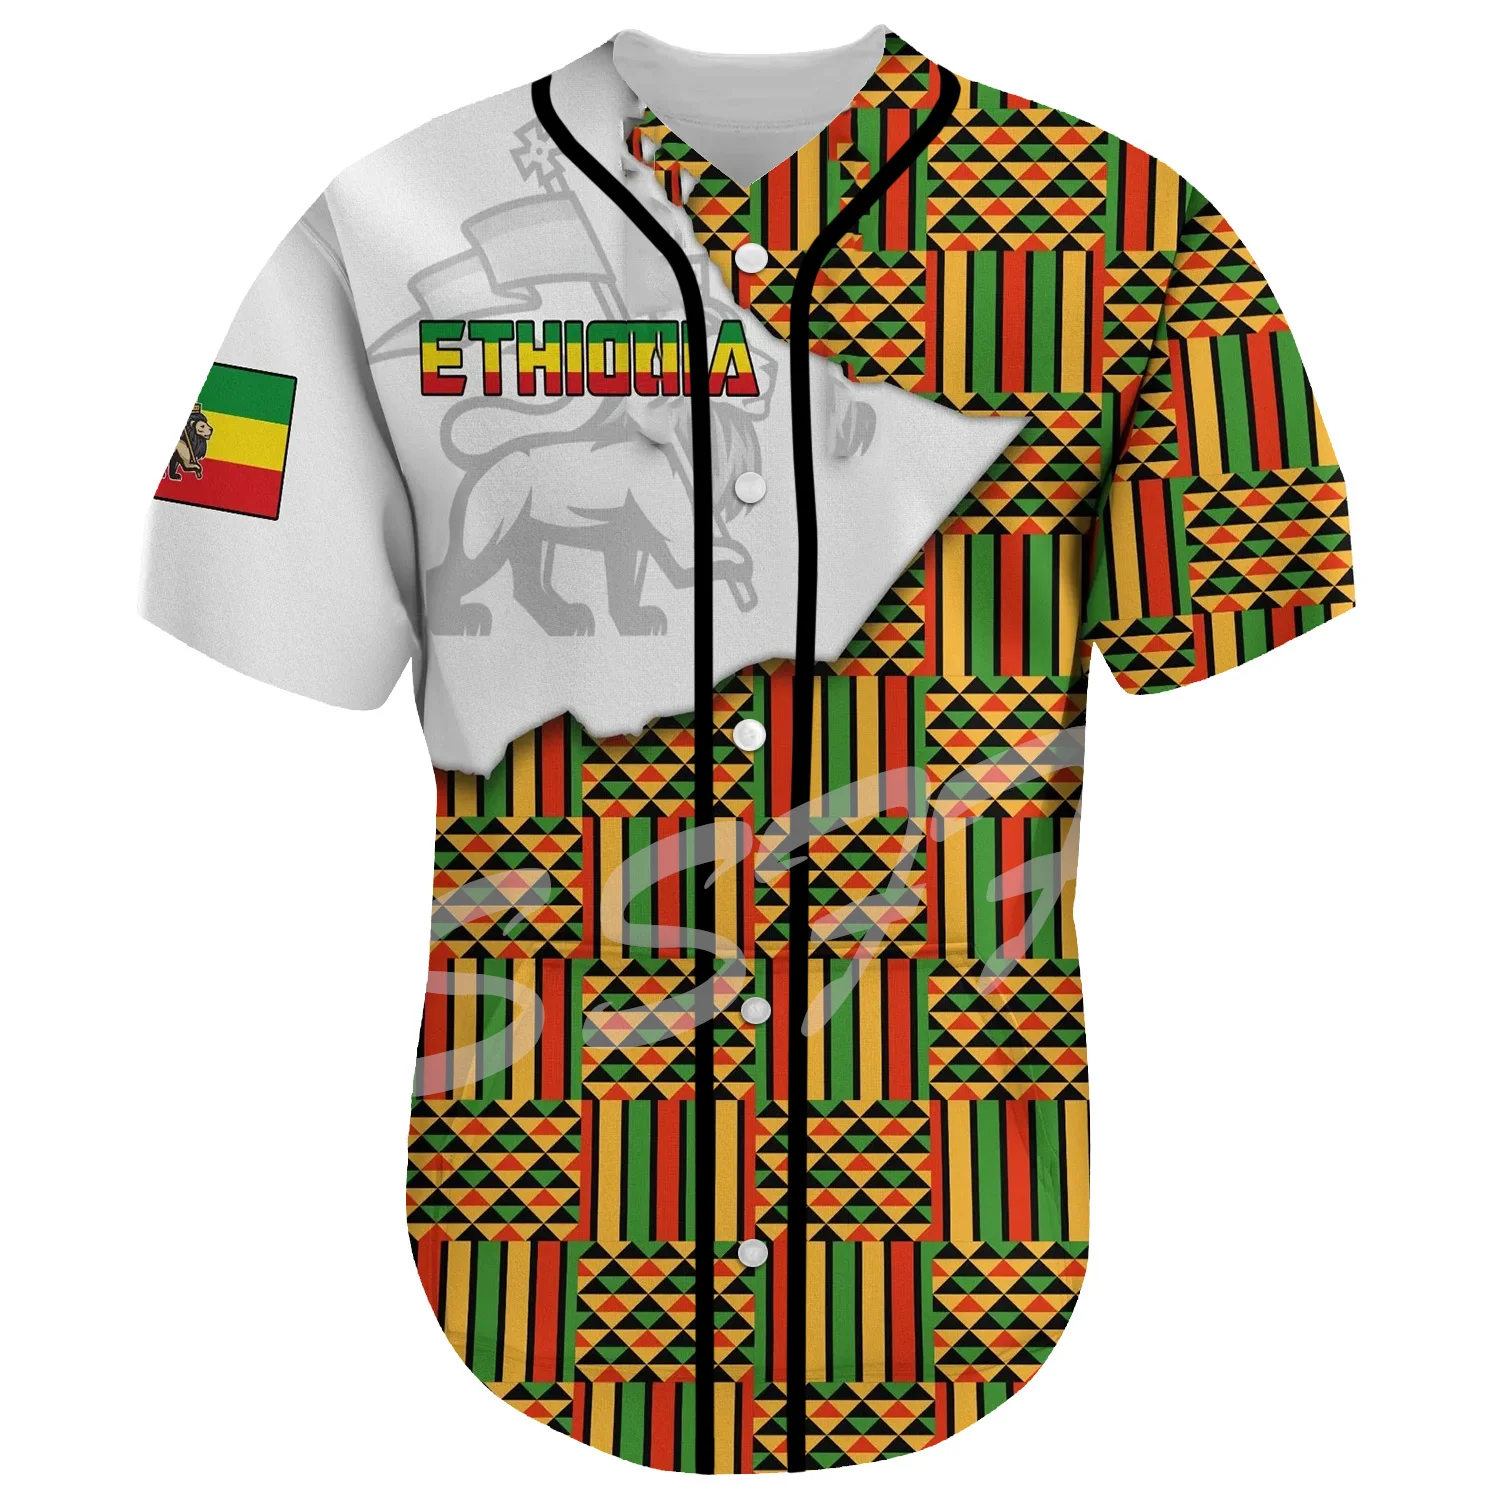 Africa County Ethiopia Native Reggae Lion Tattoo 3DPrint Summer Harajuku Casual Funny Baseball Jersey Shirts Short Sleeves X11